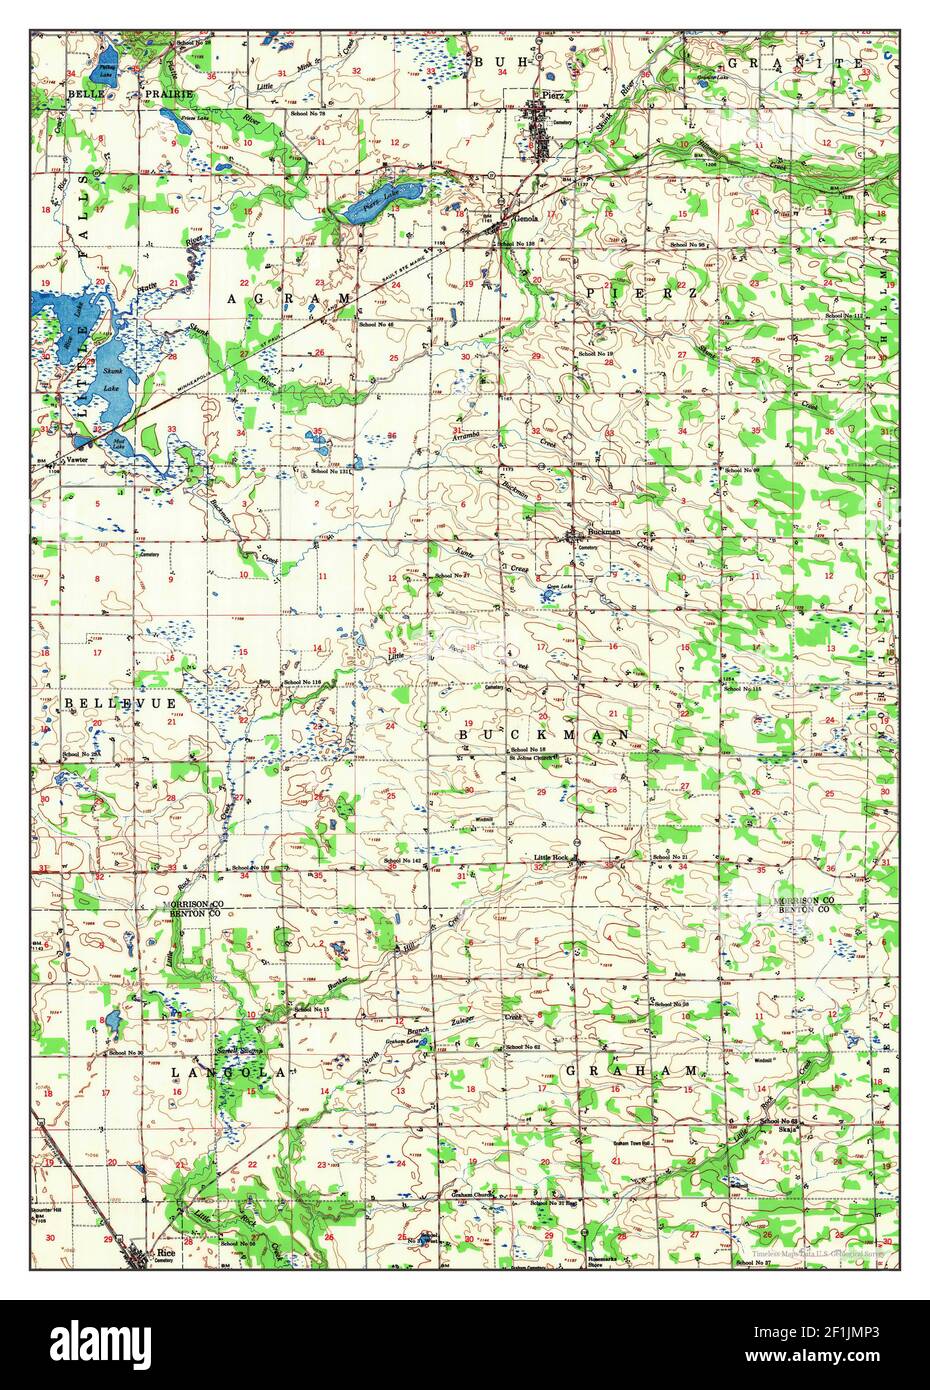 Pierz, Minnesota, map 1948, 1:62500, United States of America by Timeless Maps, data U.S. Geological Survey Stock Photo